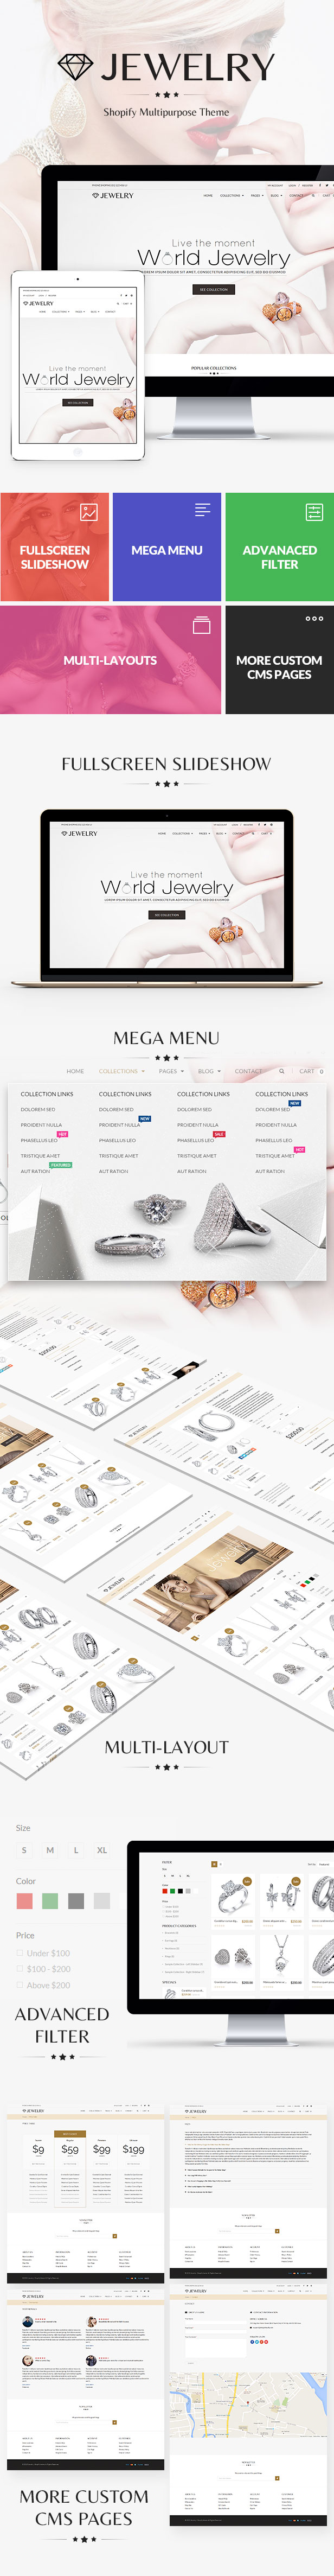 landingpage - Jewelry Responsive Shopify Theme